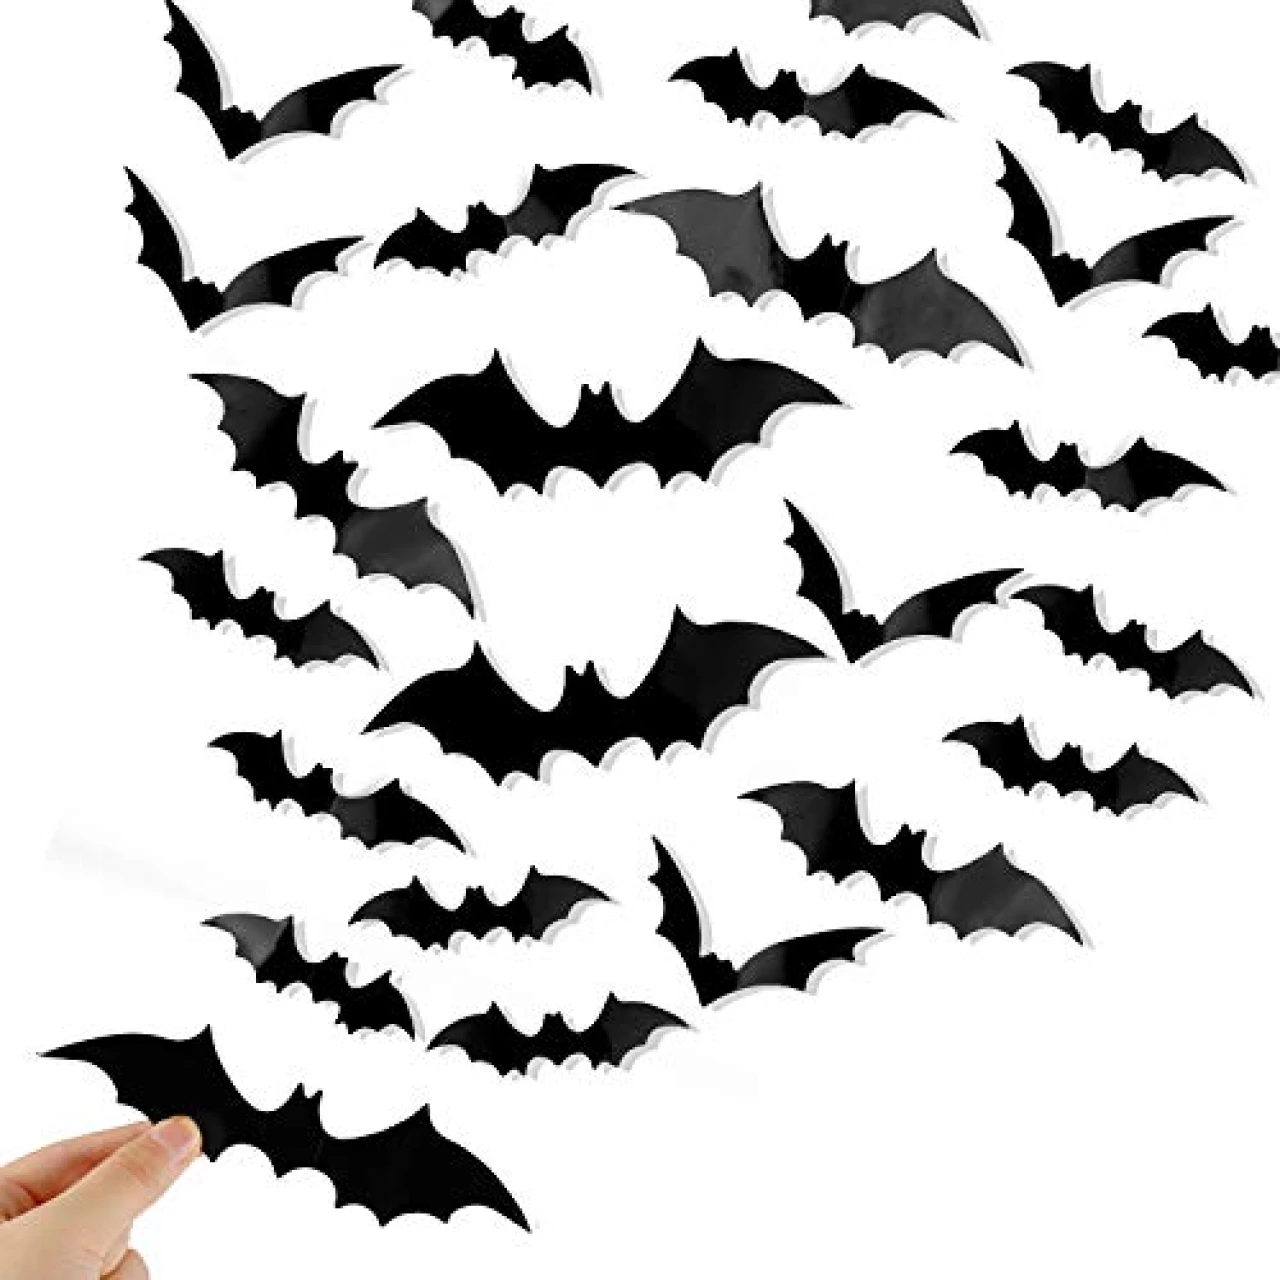 DIYASY Bats Wall Decor,120 Pcs 3D Bat Halloween Decoration Stickers